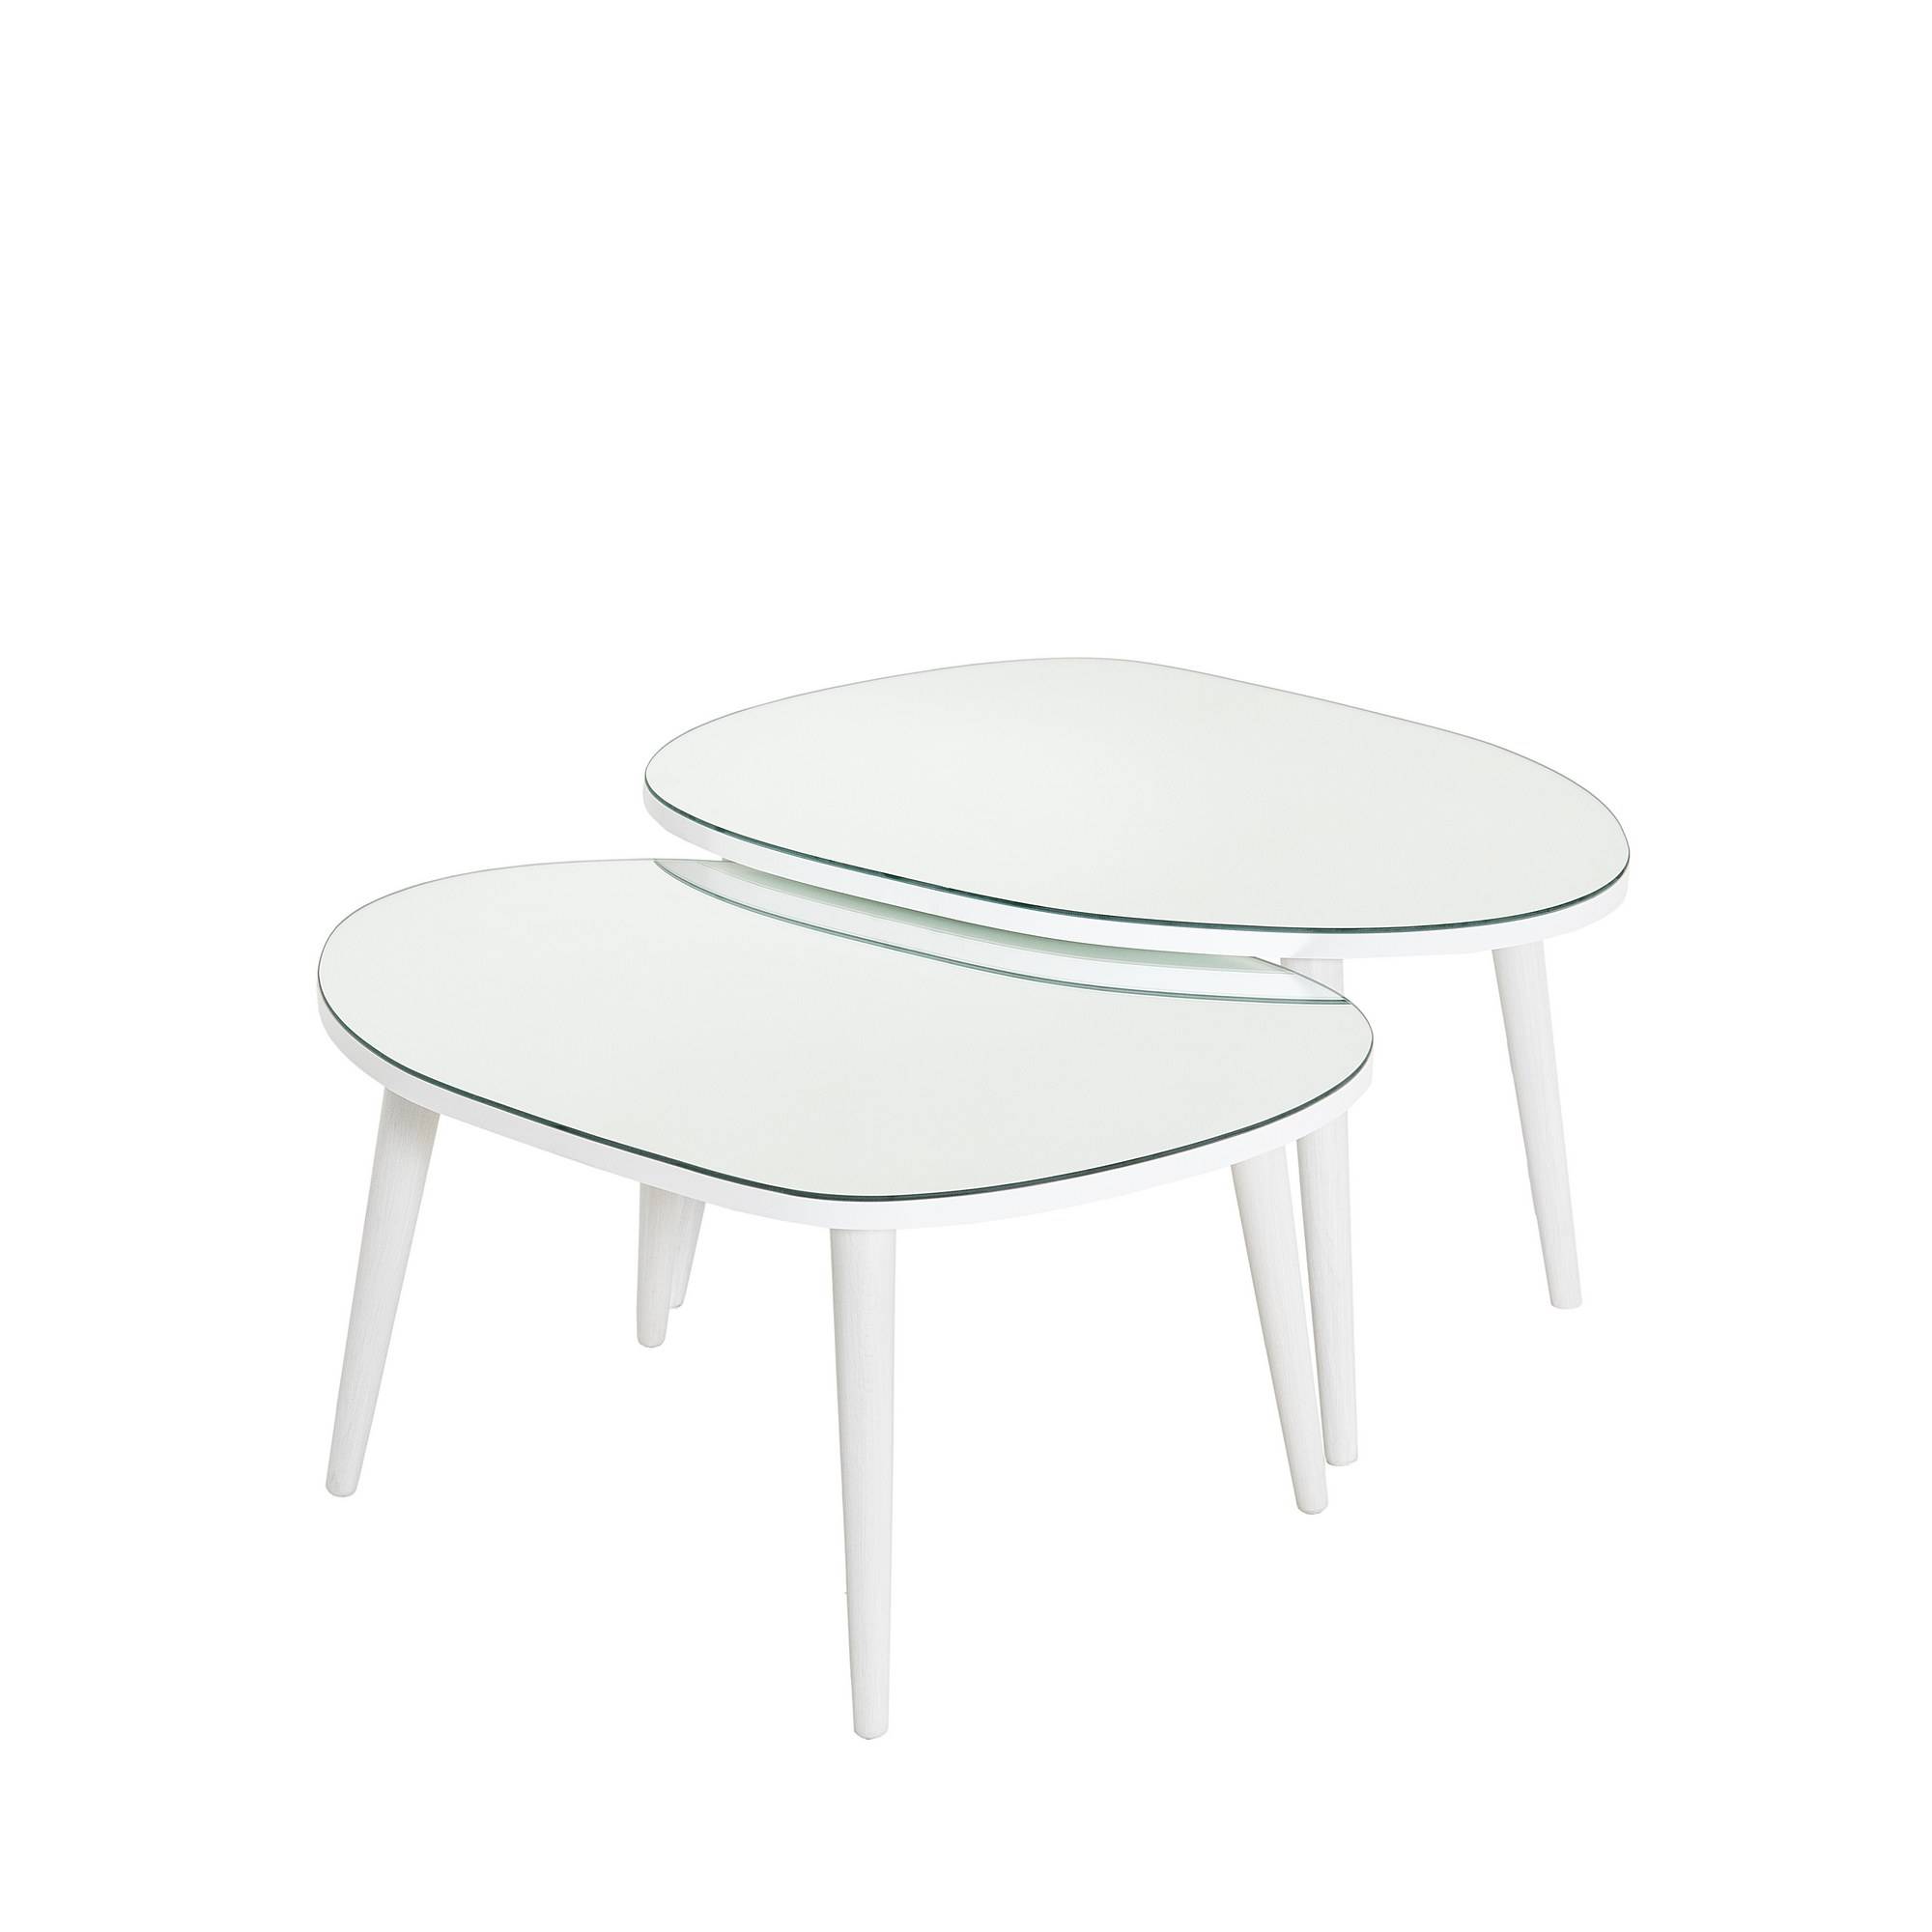 Set van 2 Casina ovale driepoot salontafels Wit hout en spiegelglas